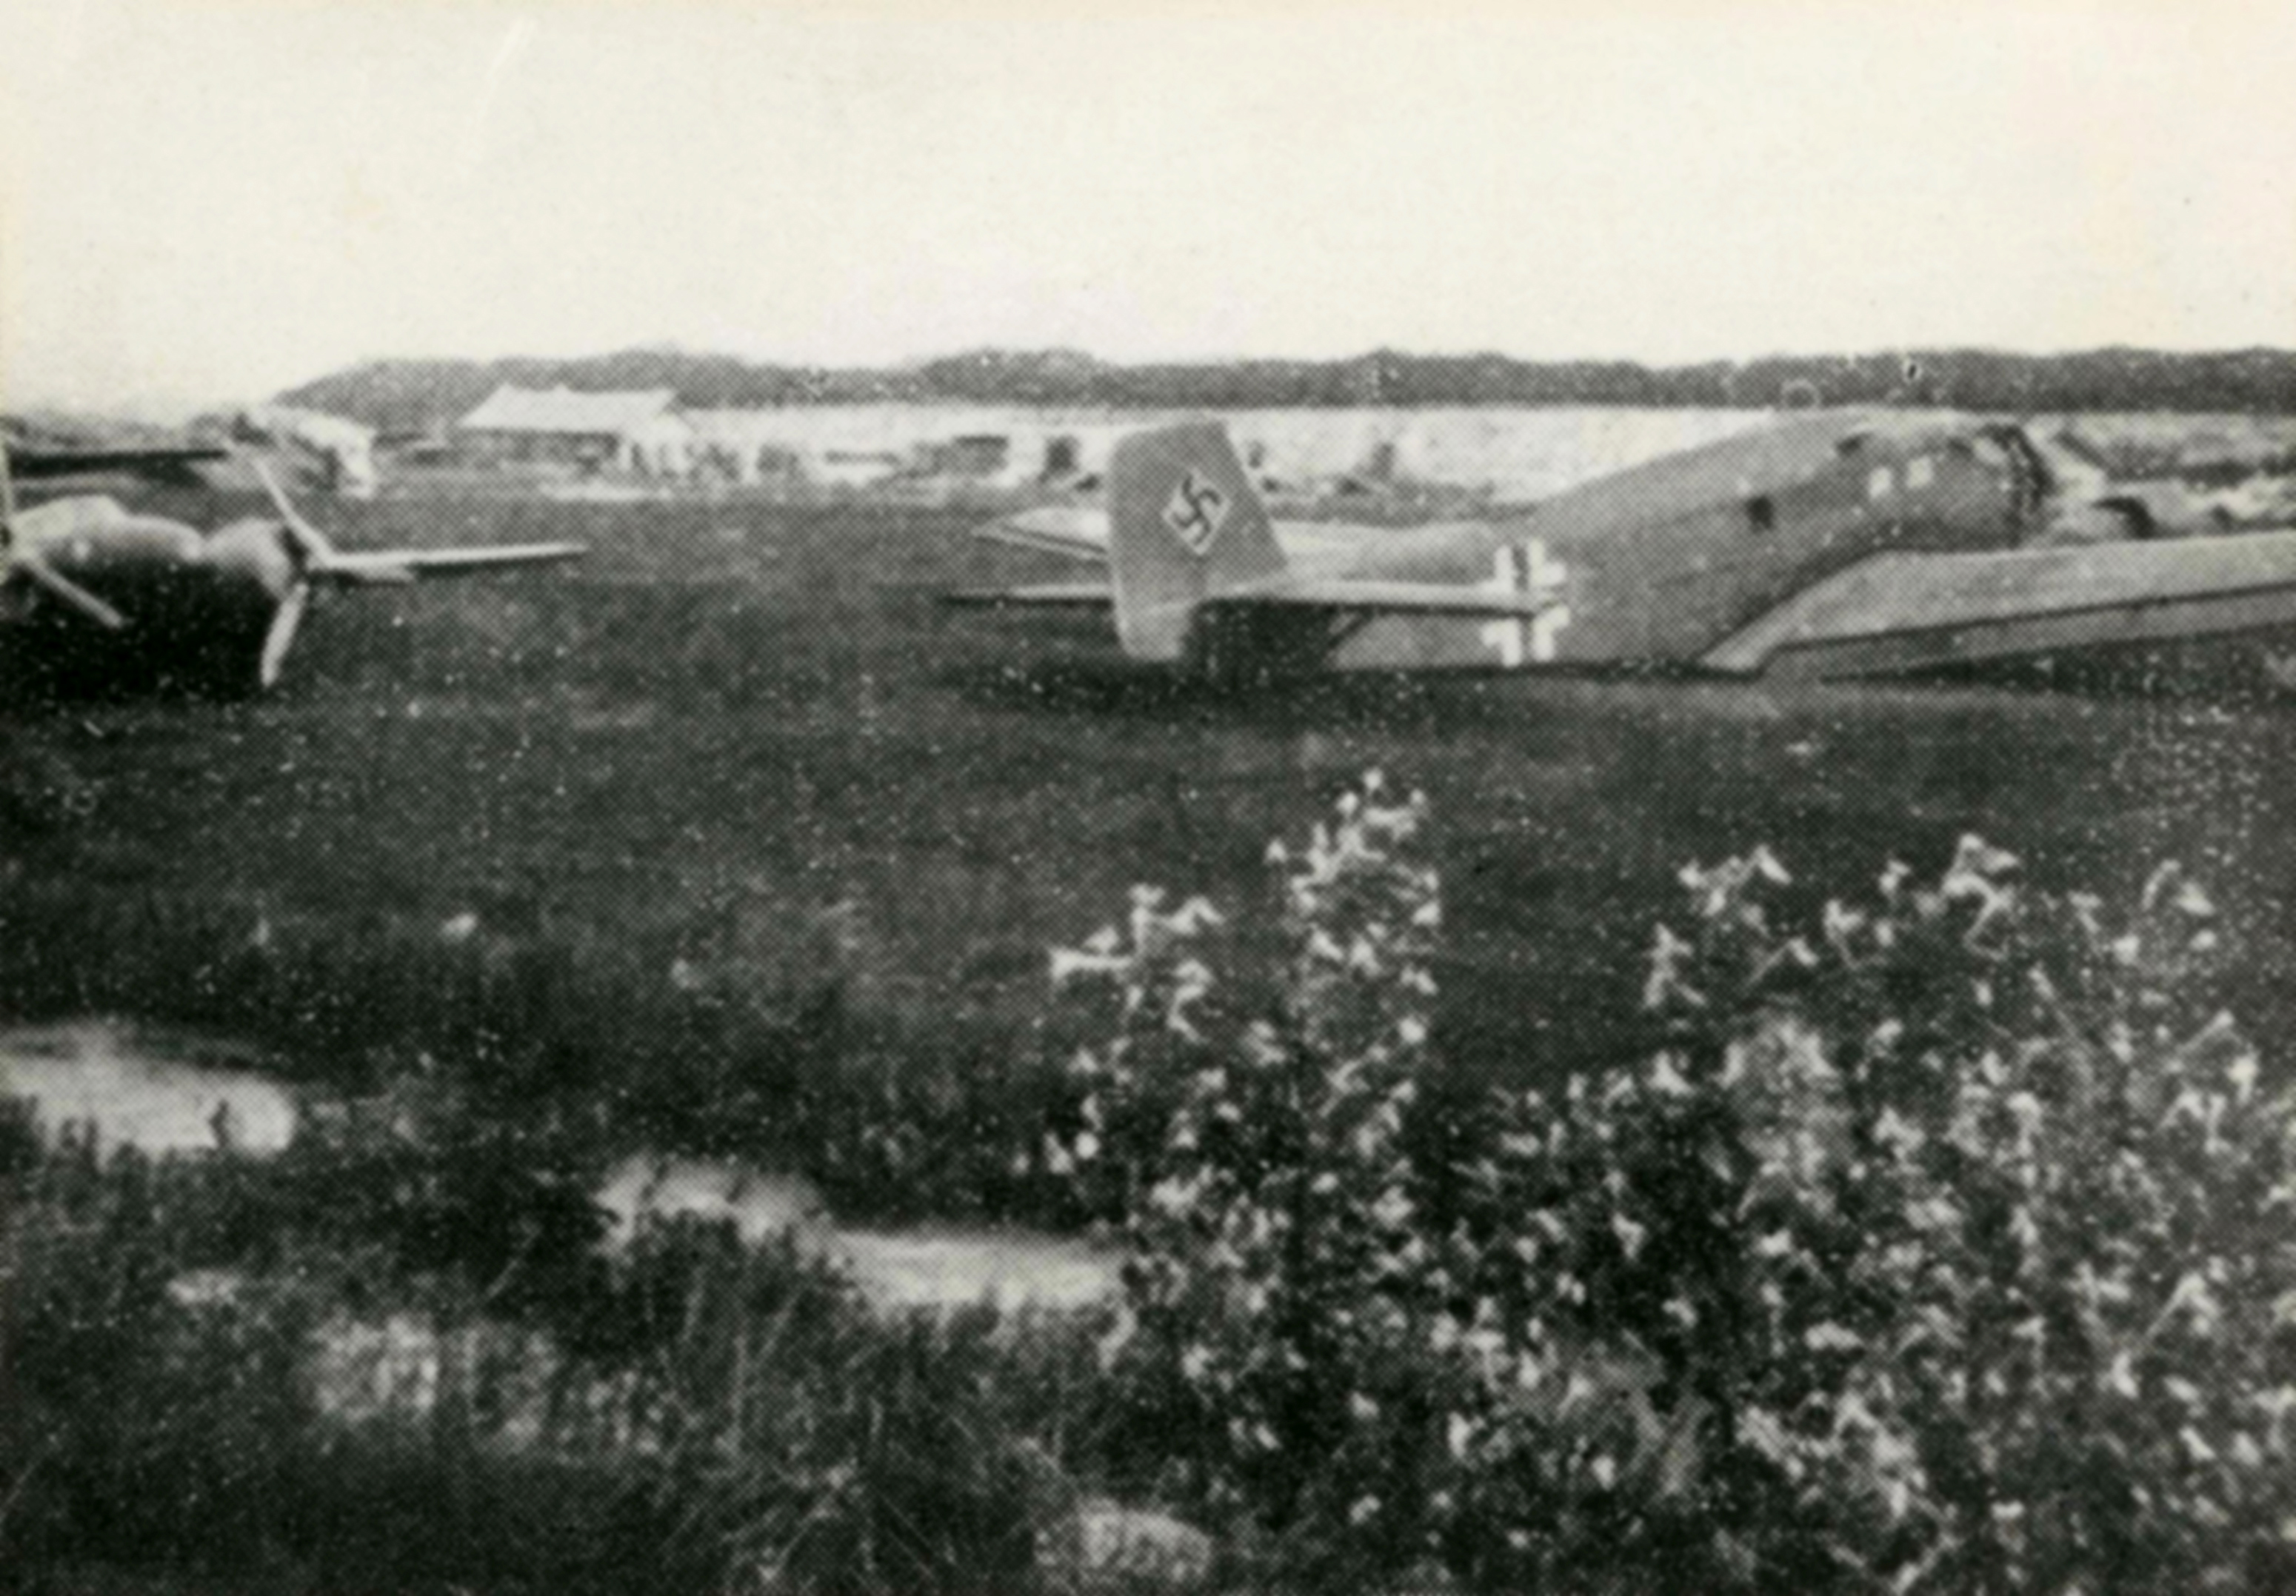 Fall Gelb Junkers Ju 52 landed at Ockenburg airfield near the Hague 10th May 1940 NIOD